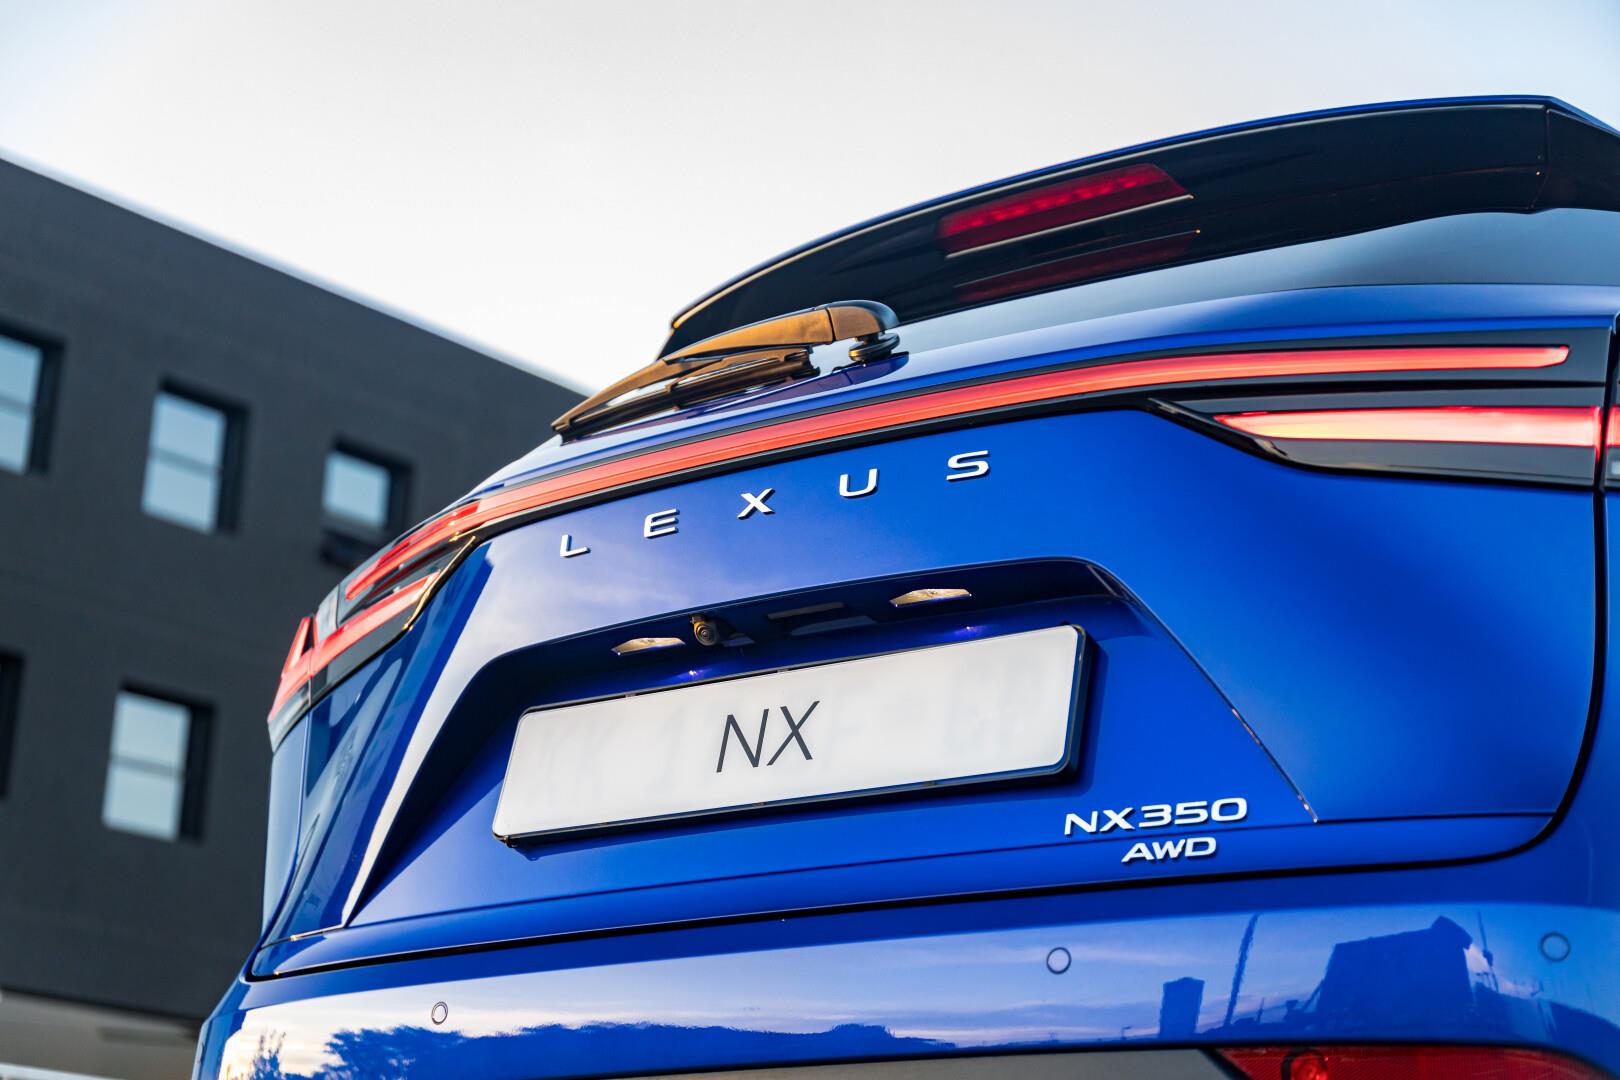 lexus introduce a new nx range in sa!